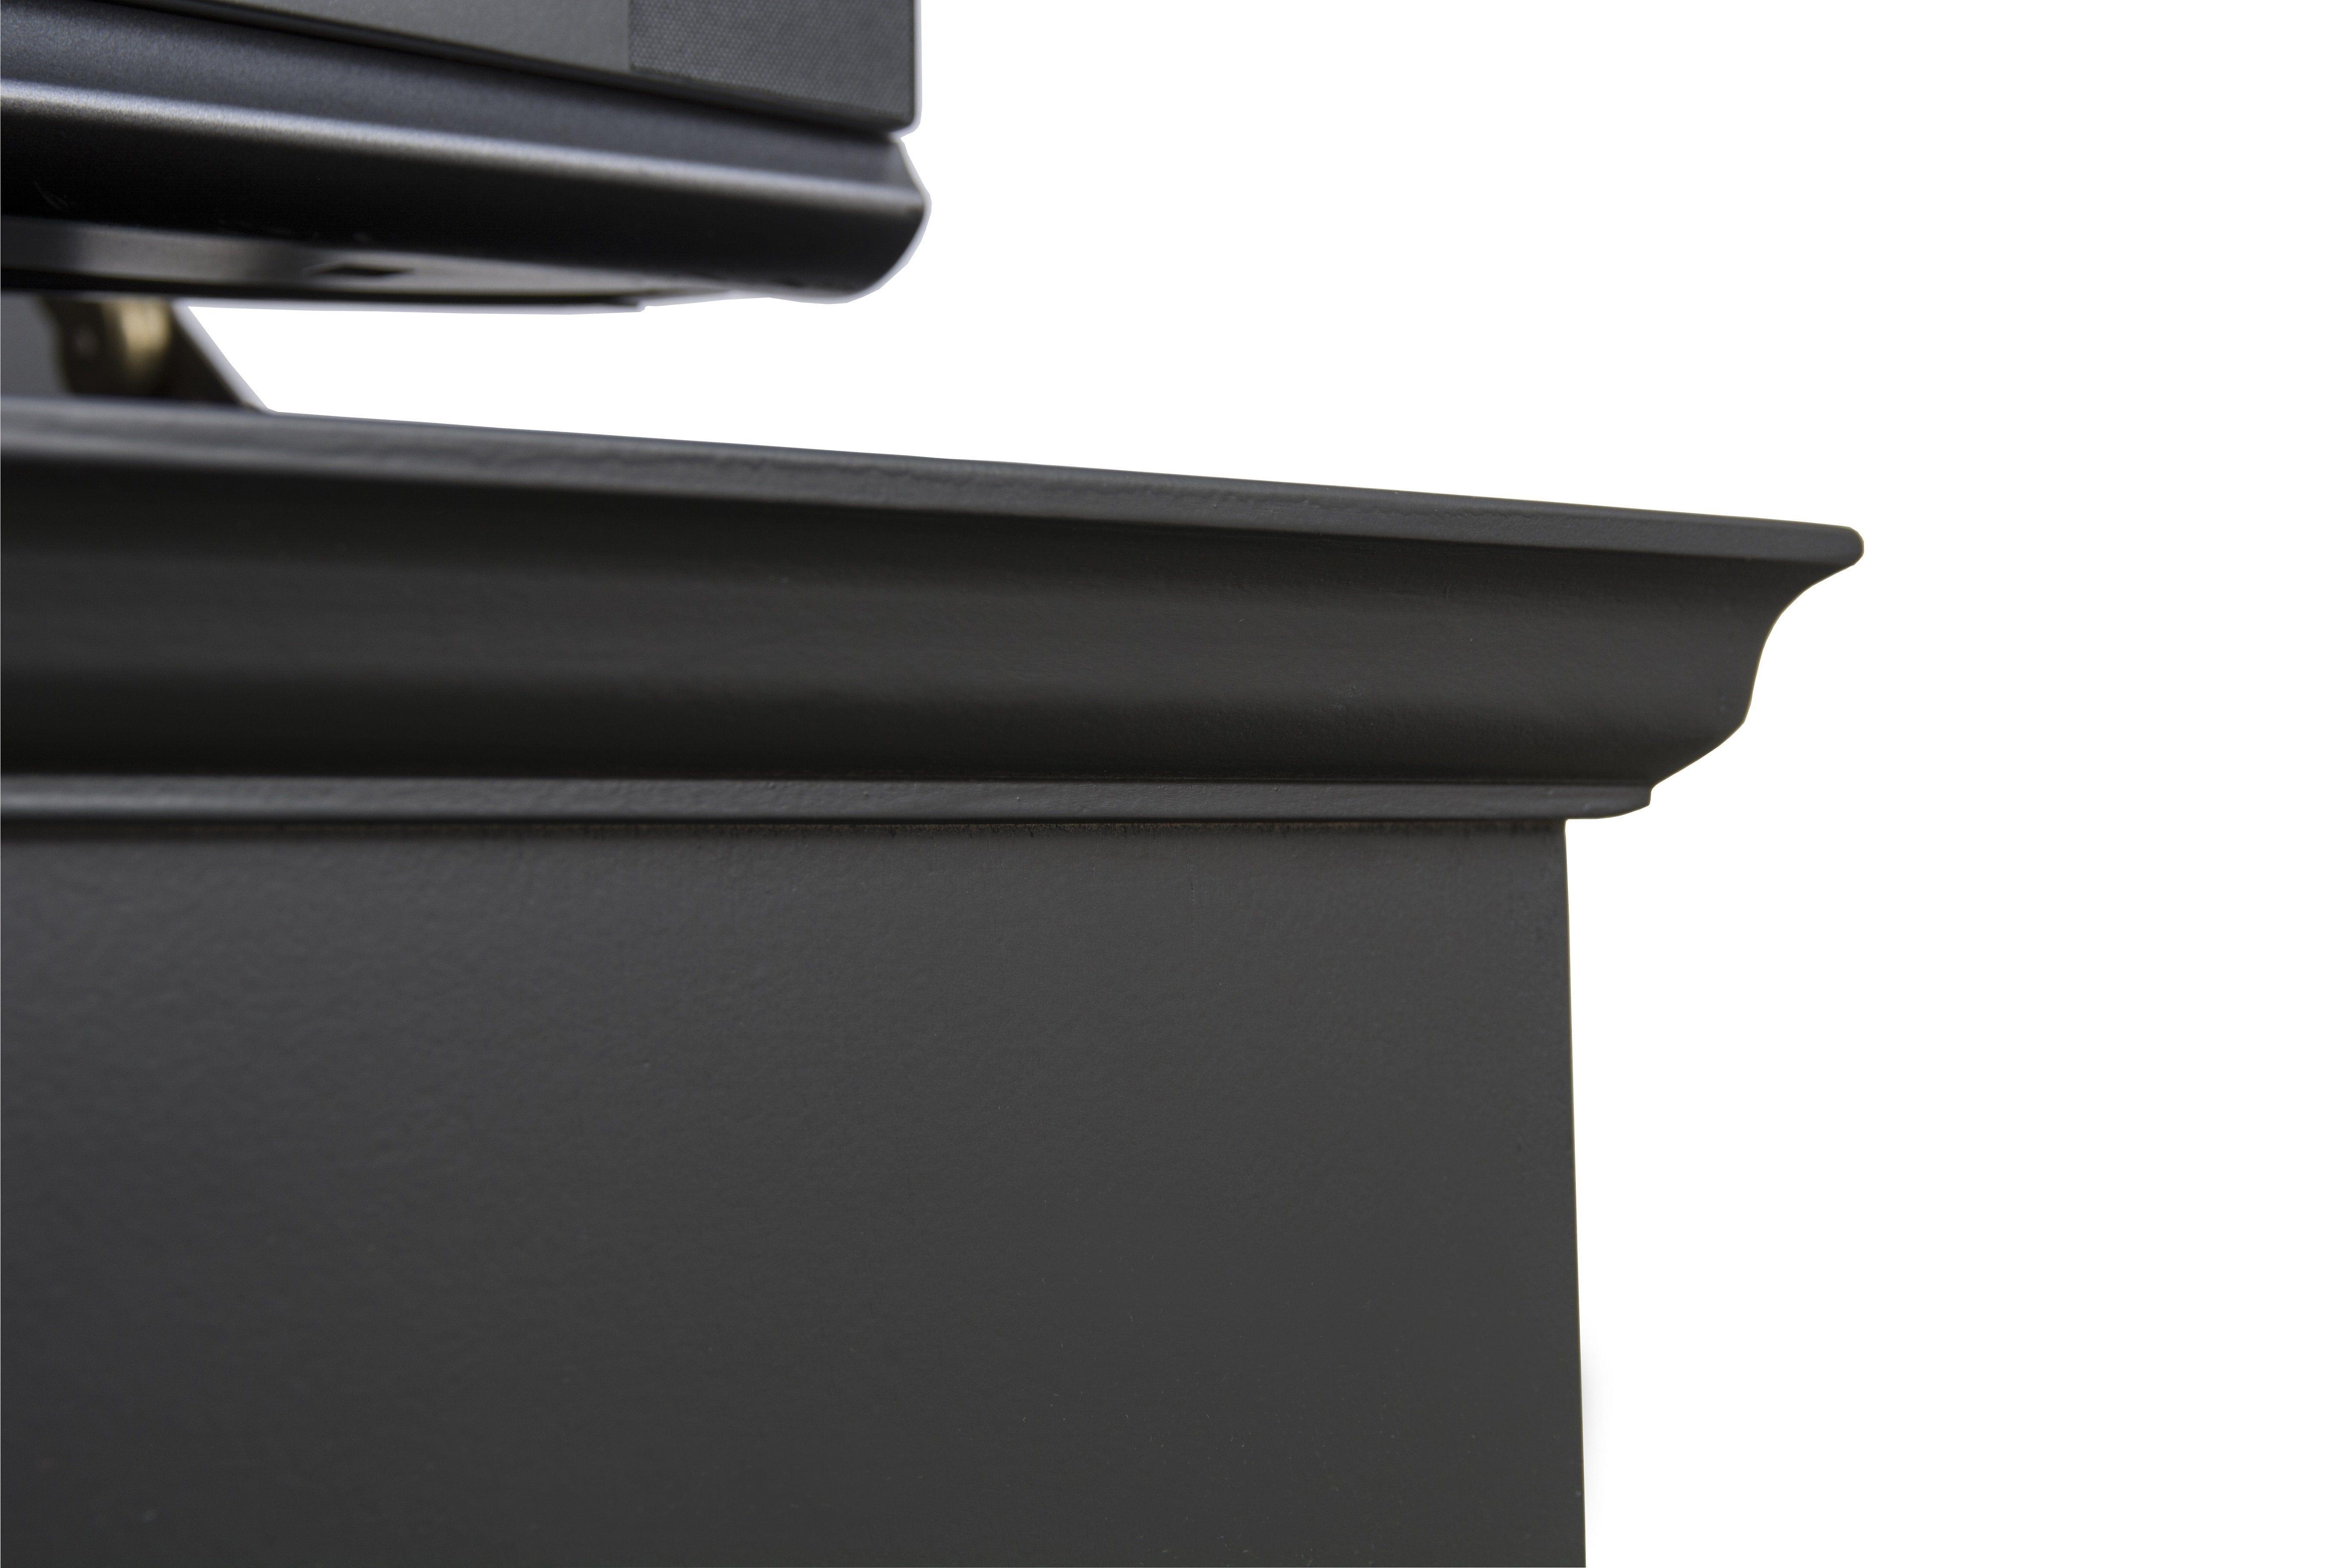 Showroom Model Elevate 72011 Black TV Lift Cabinet corner shot - Touchstone Home Products, Inc.